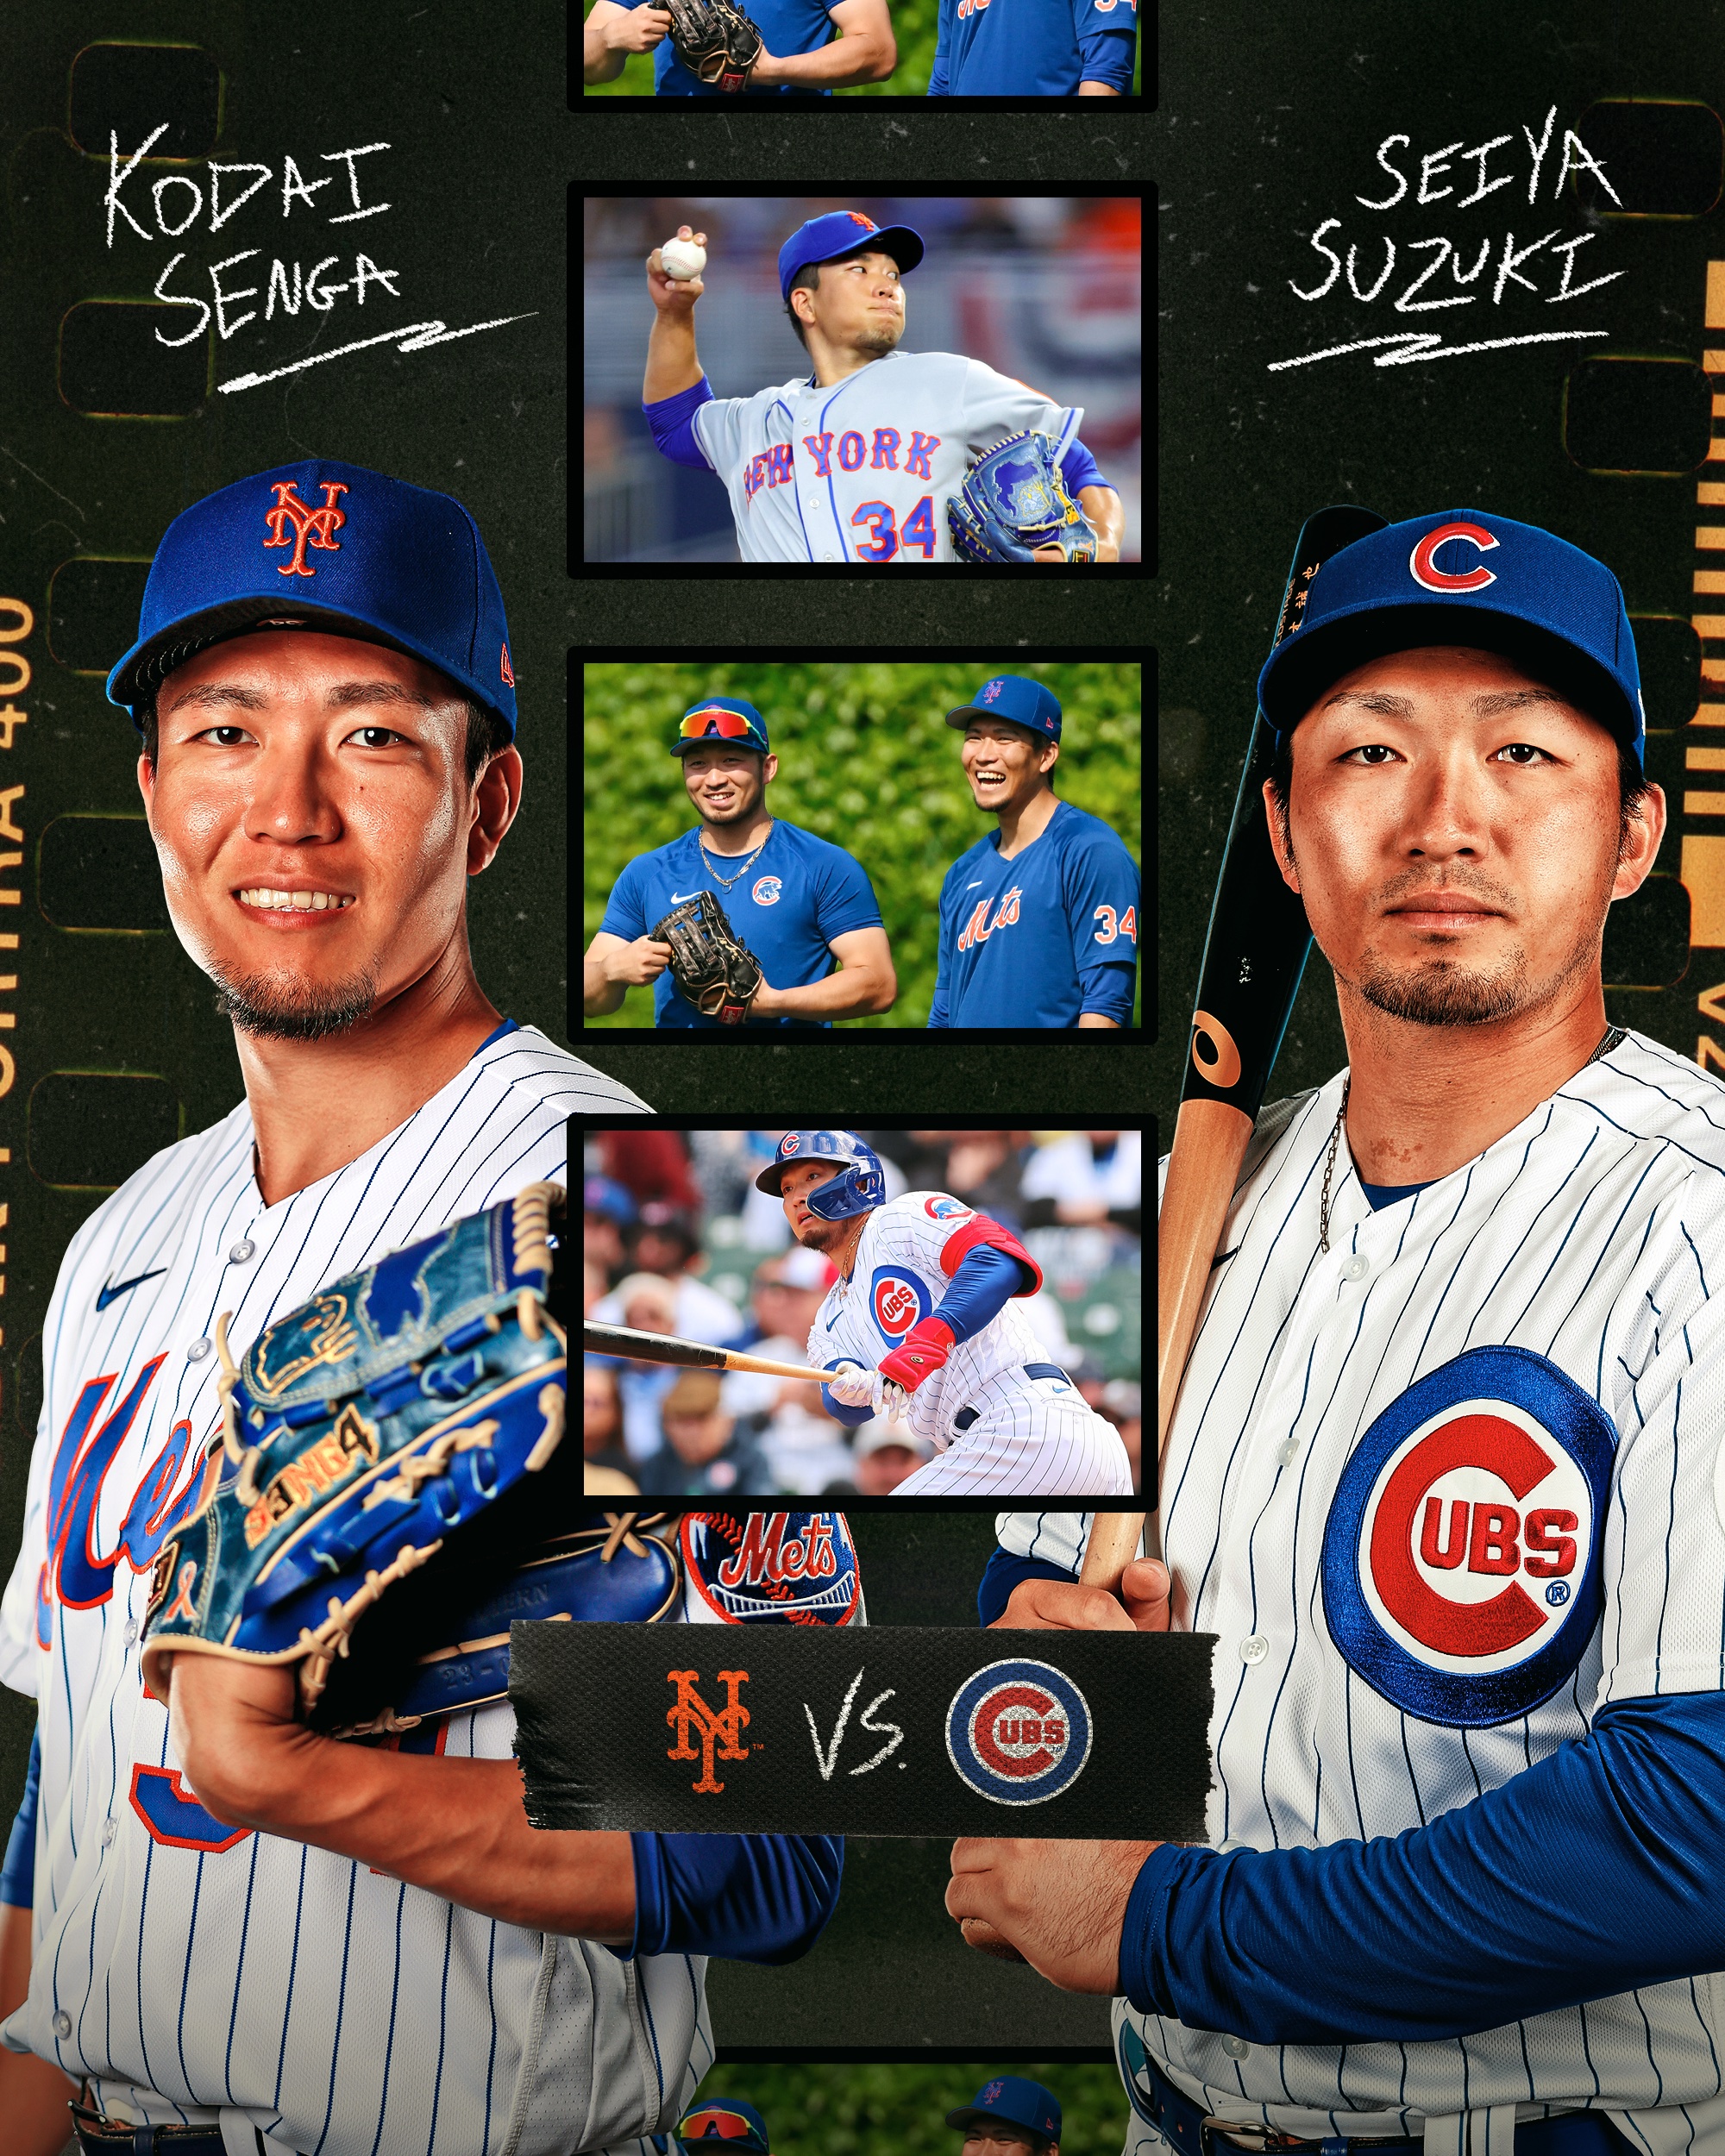 MLB on X: Kodai Senga and Seiya Suzuki face off tonight for the